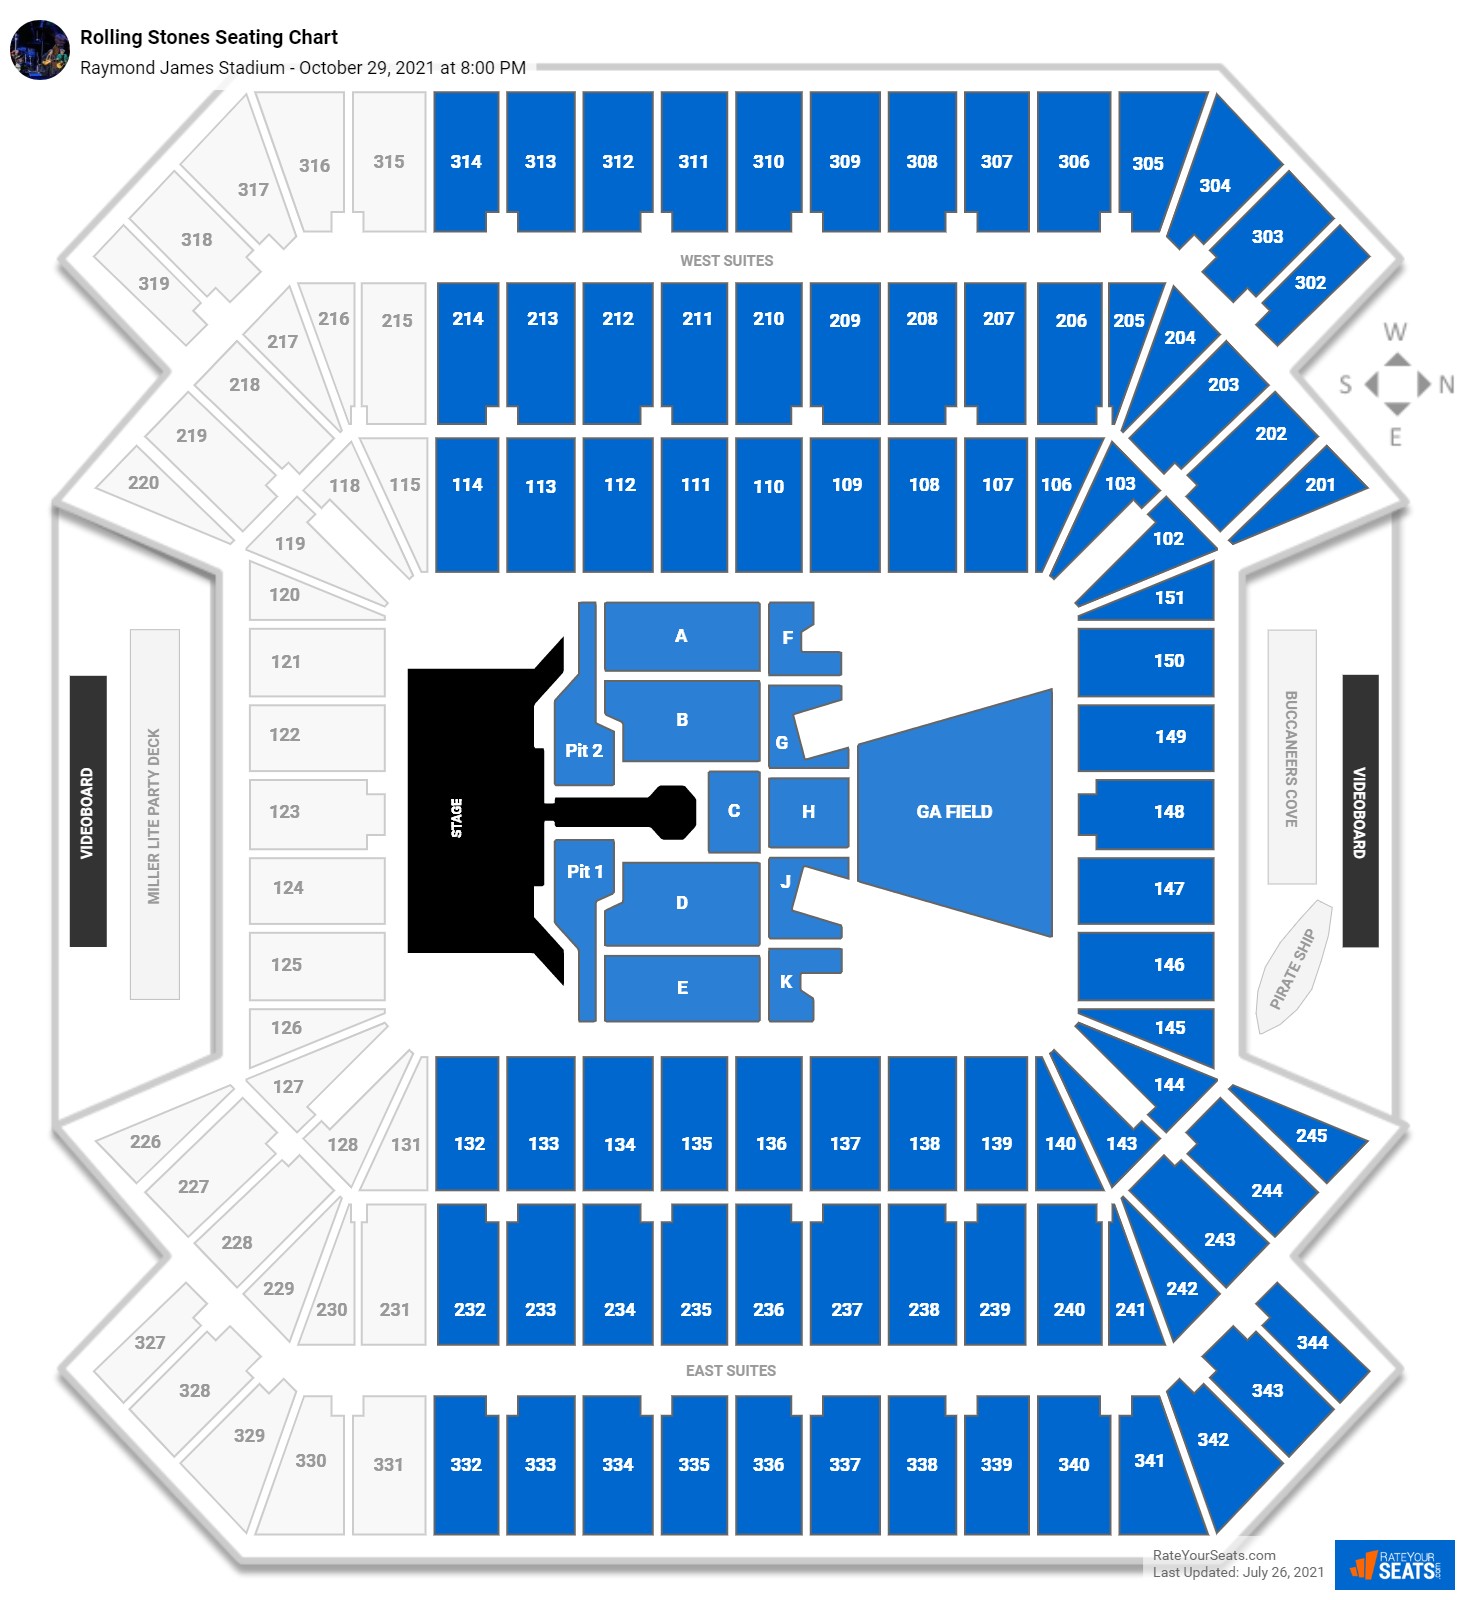 Raymond James Stadium Concert Seating Chart - RateYourSeats.com